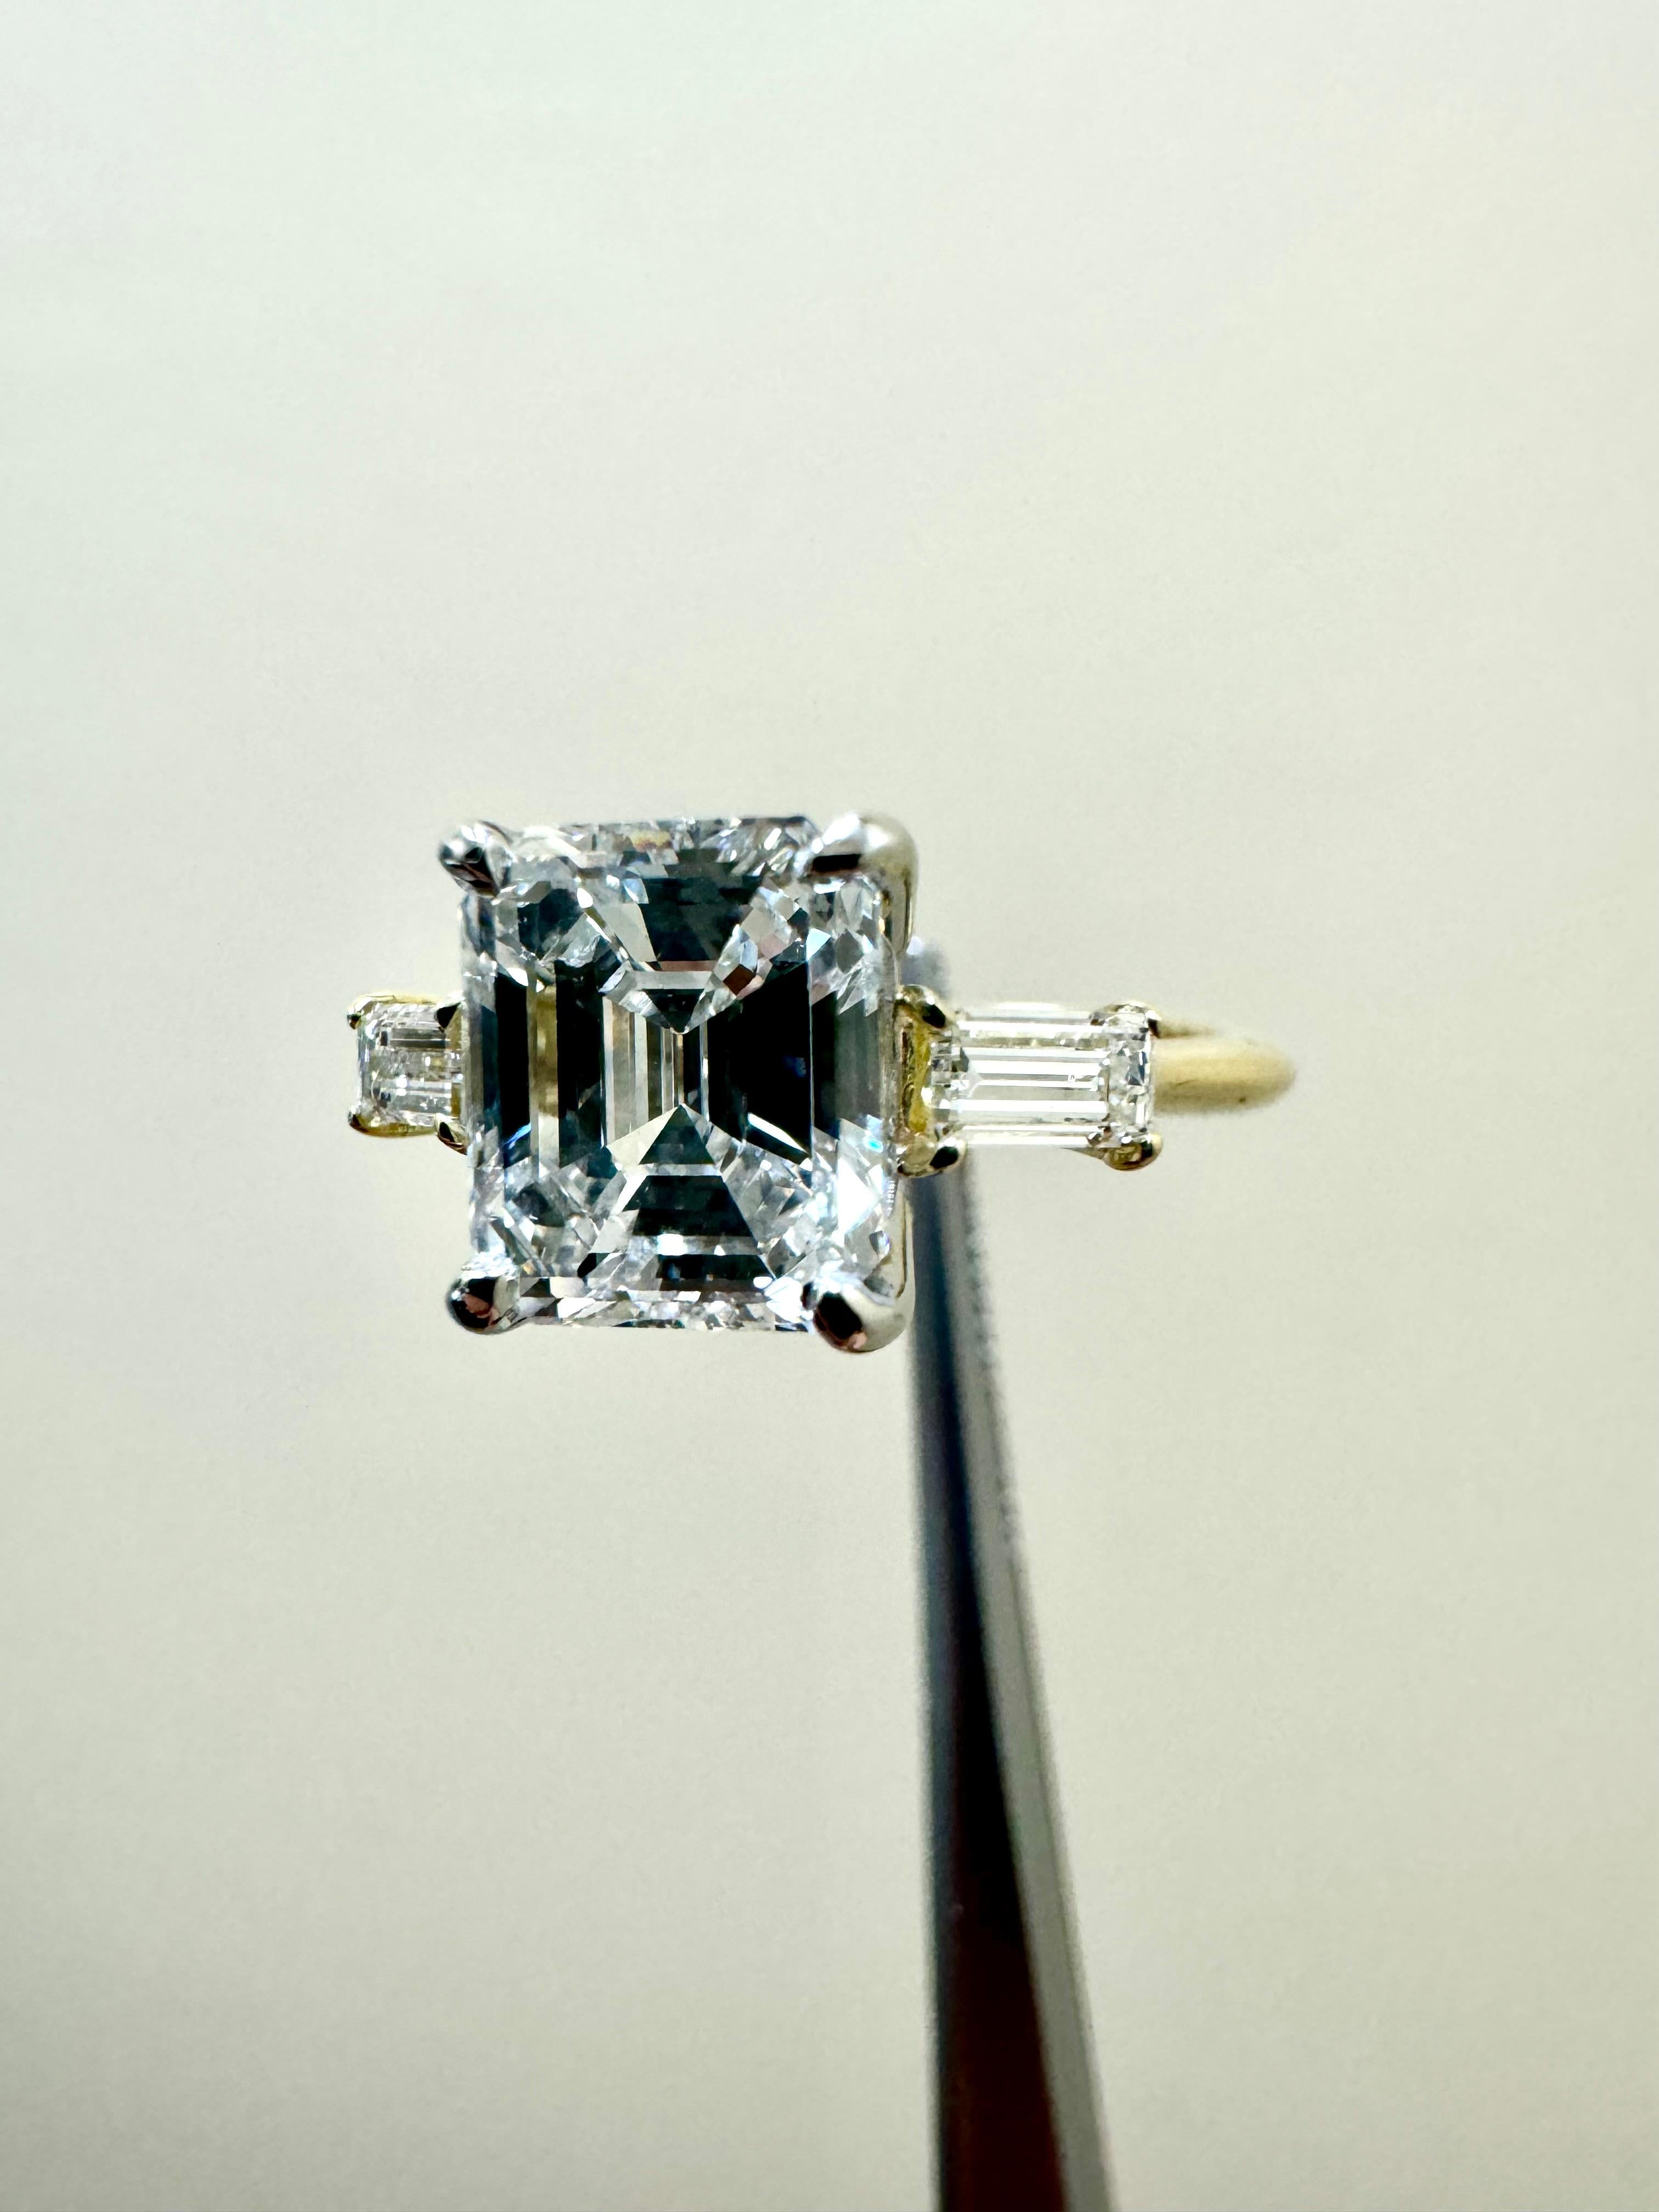 Vintage Art Deco GIA Certified 2.41 Carat Emerald Cut Diamond Engagement Ring For Sale 13